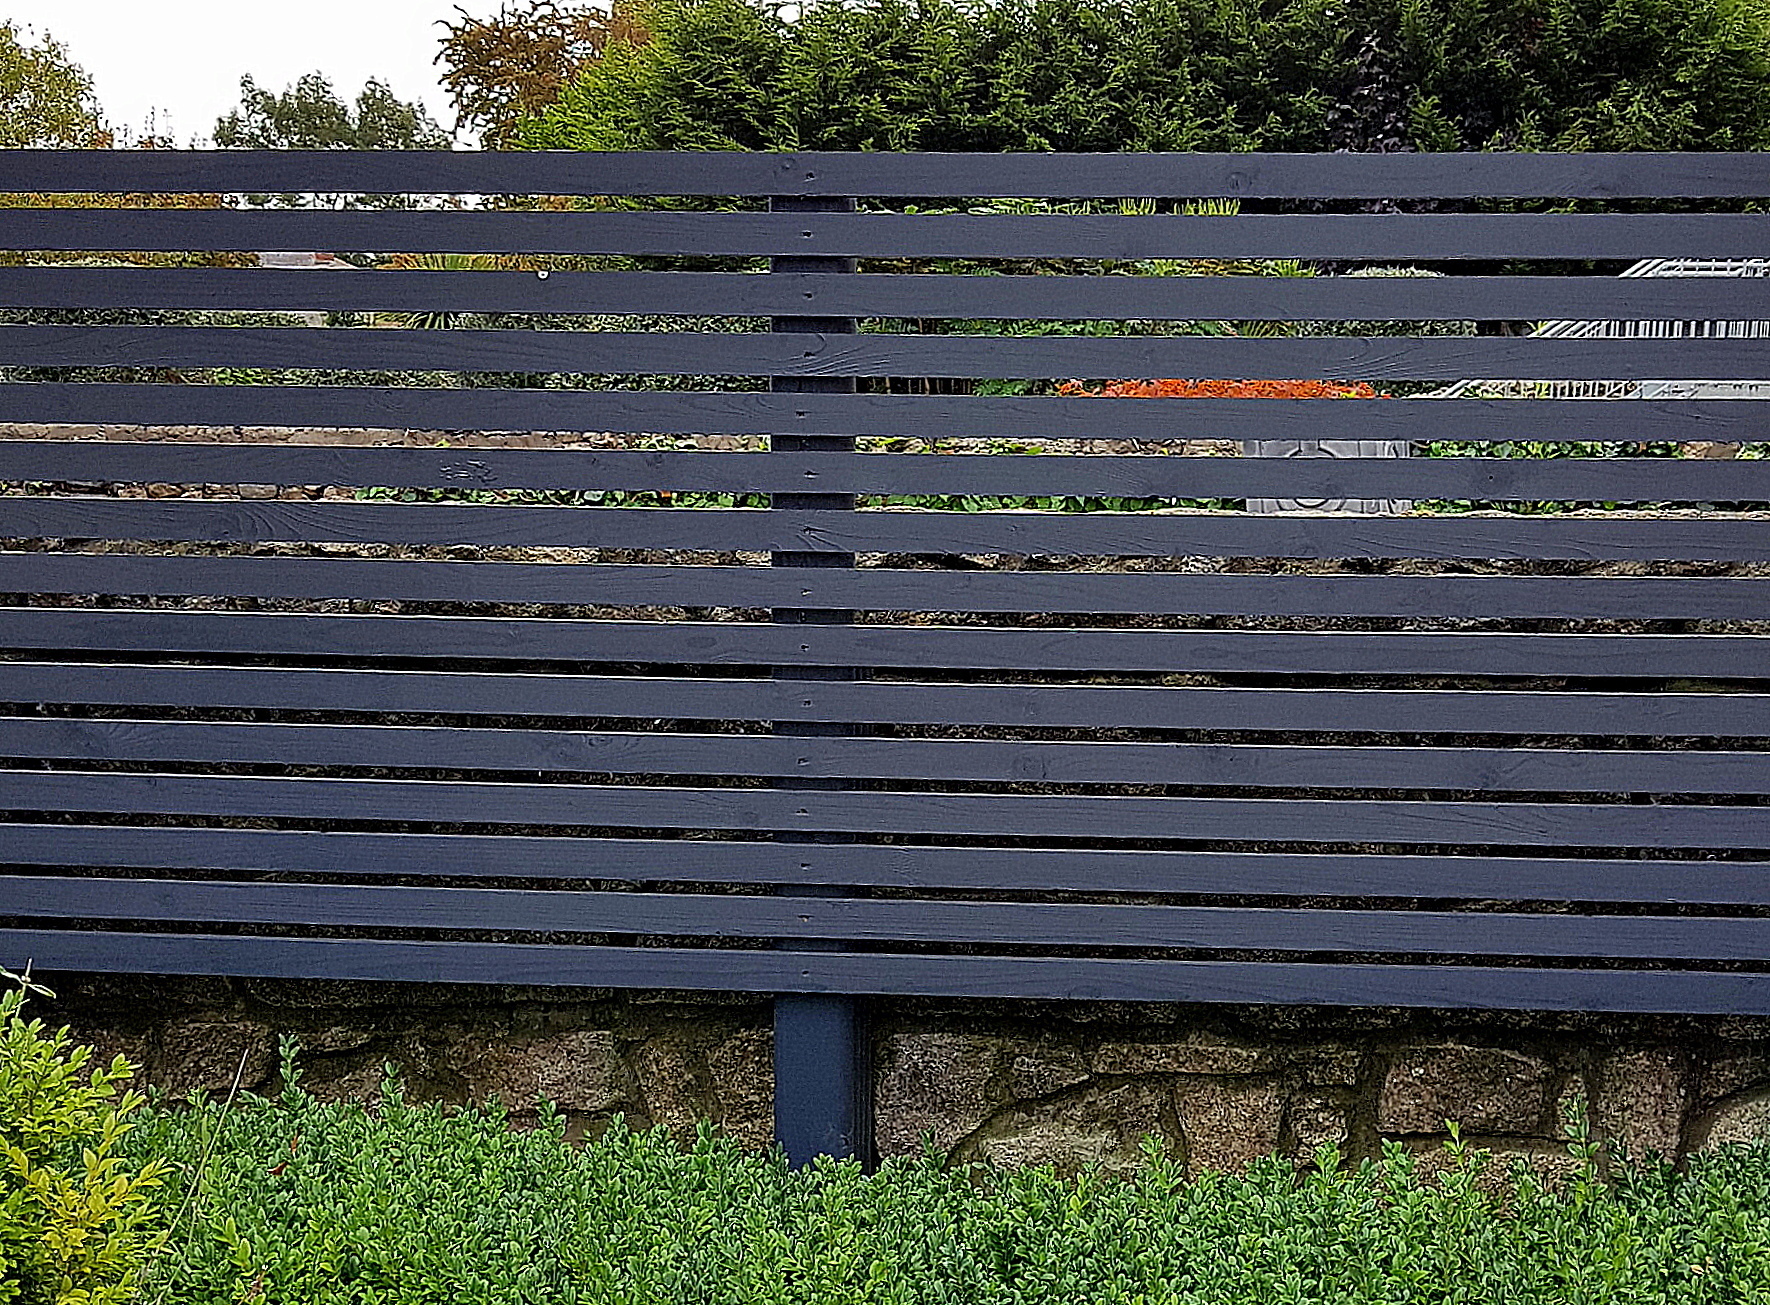 Bespoke horizontal timber slatted fencing & screening in Donnybrook, Dublin 4 | Design & Installation services | Tel 087-2306 128